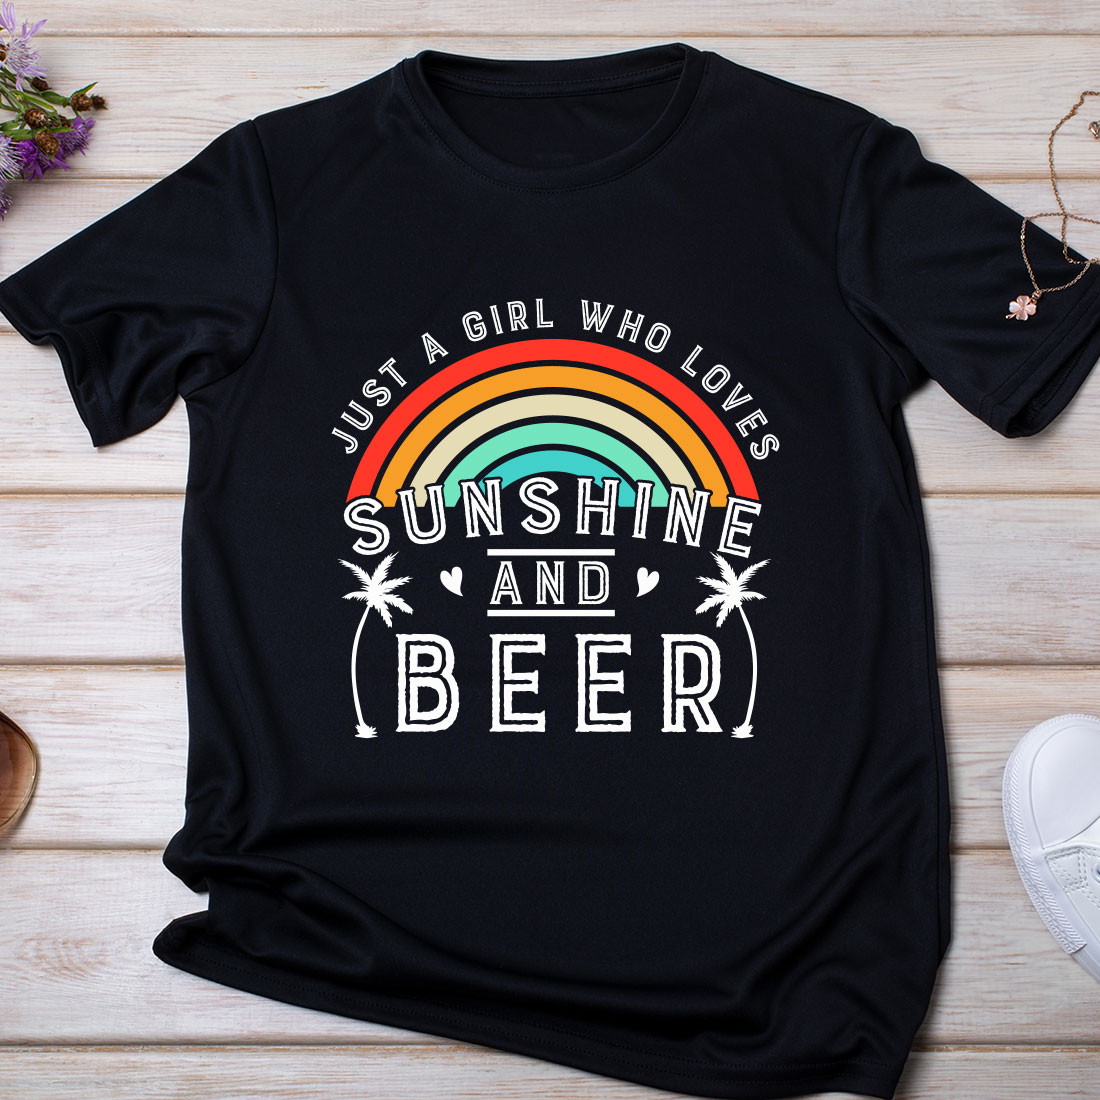 Funny Summer Beach T-shirt Design Bundle - 03 preview image.